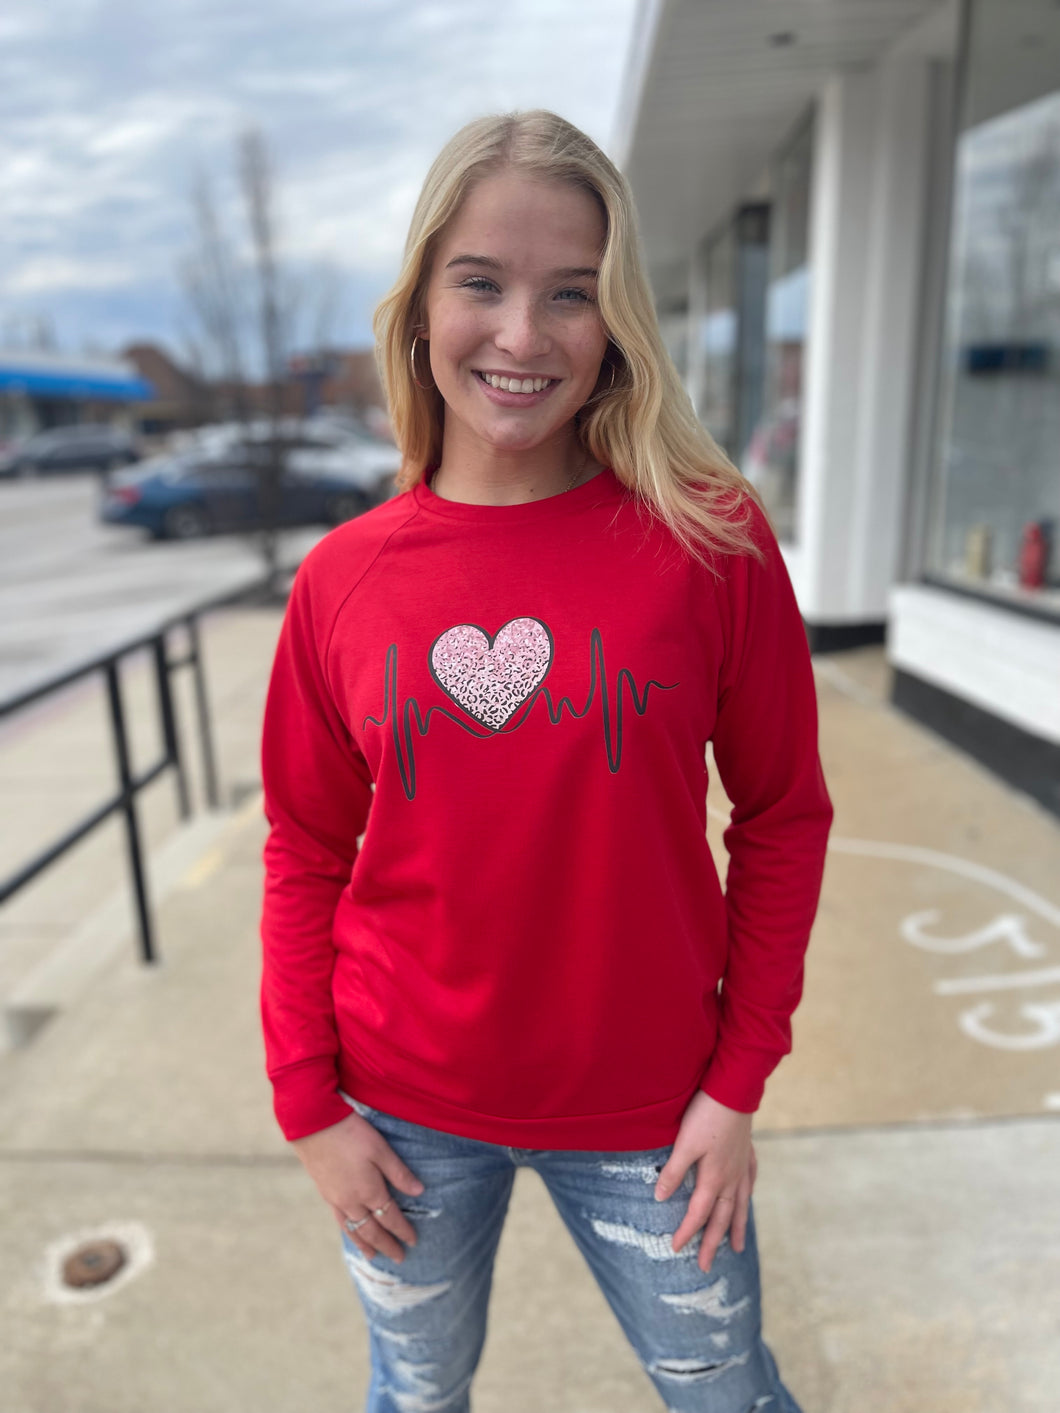 Heart sweatshirt